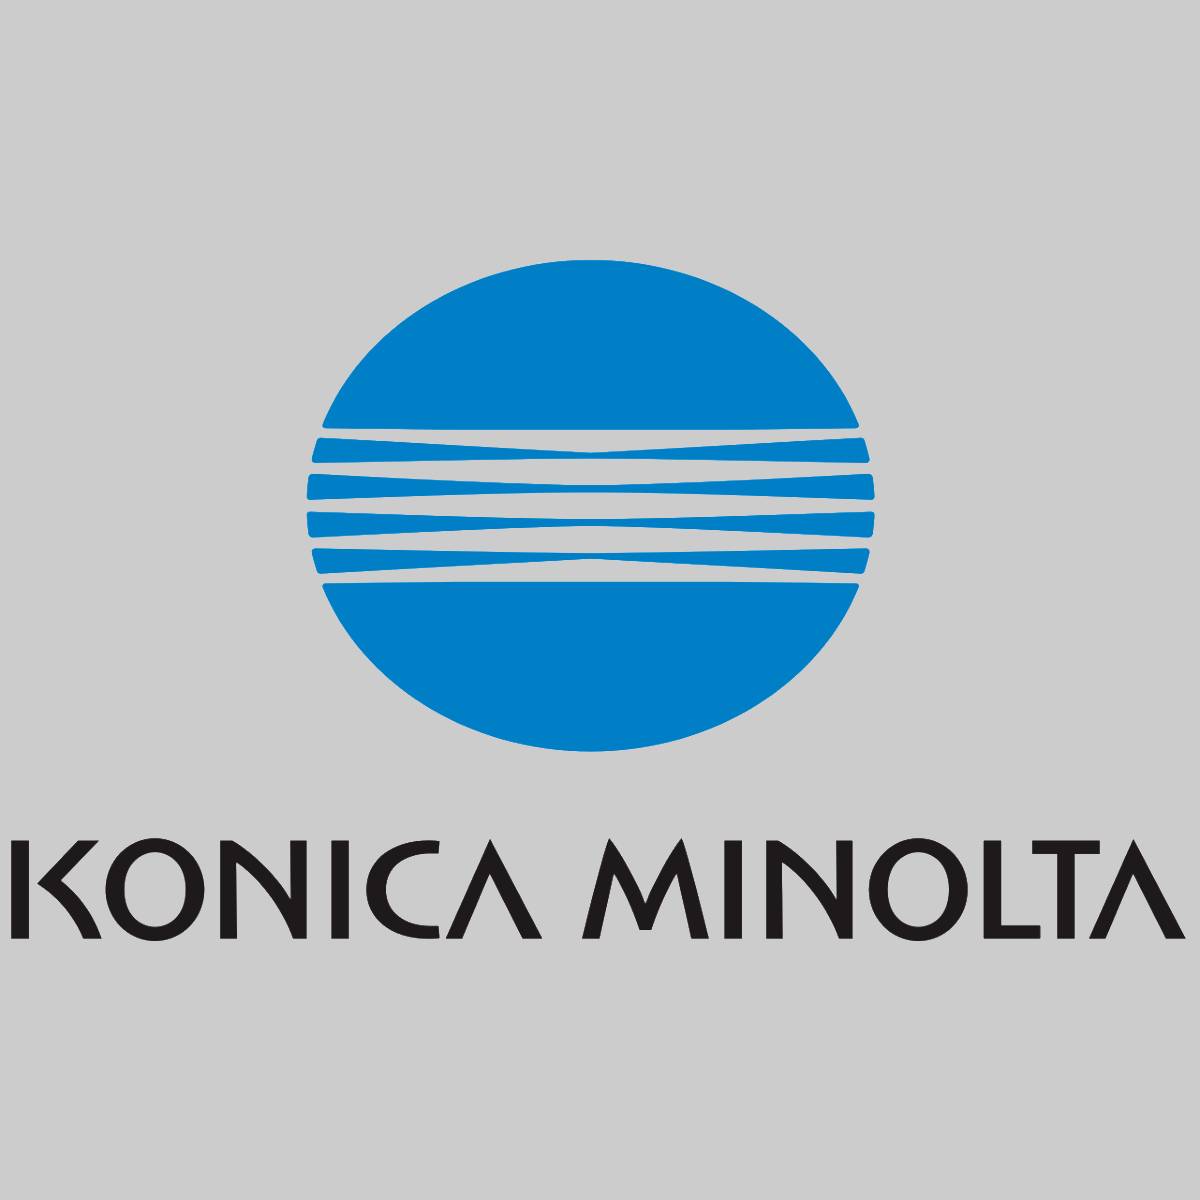 "Toner d'origine Konica Minolta jaune A0V305H pour Magicolor 1600 NEW OVP